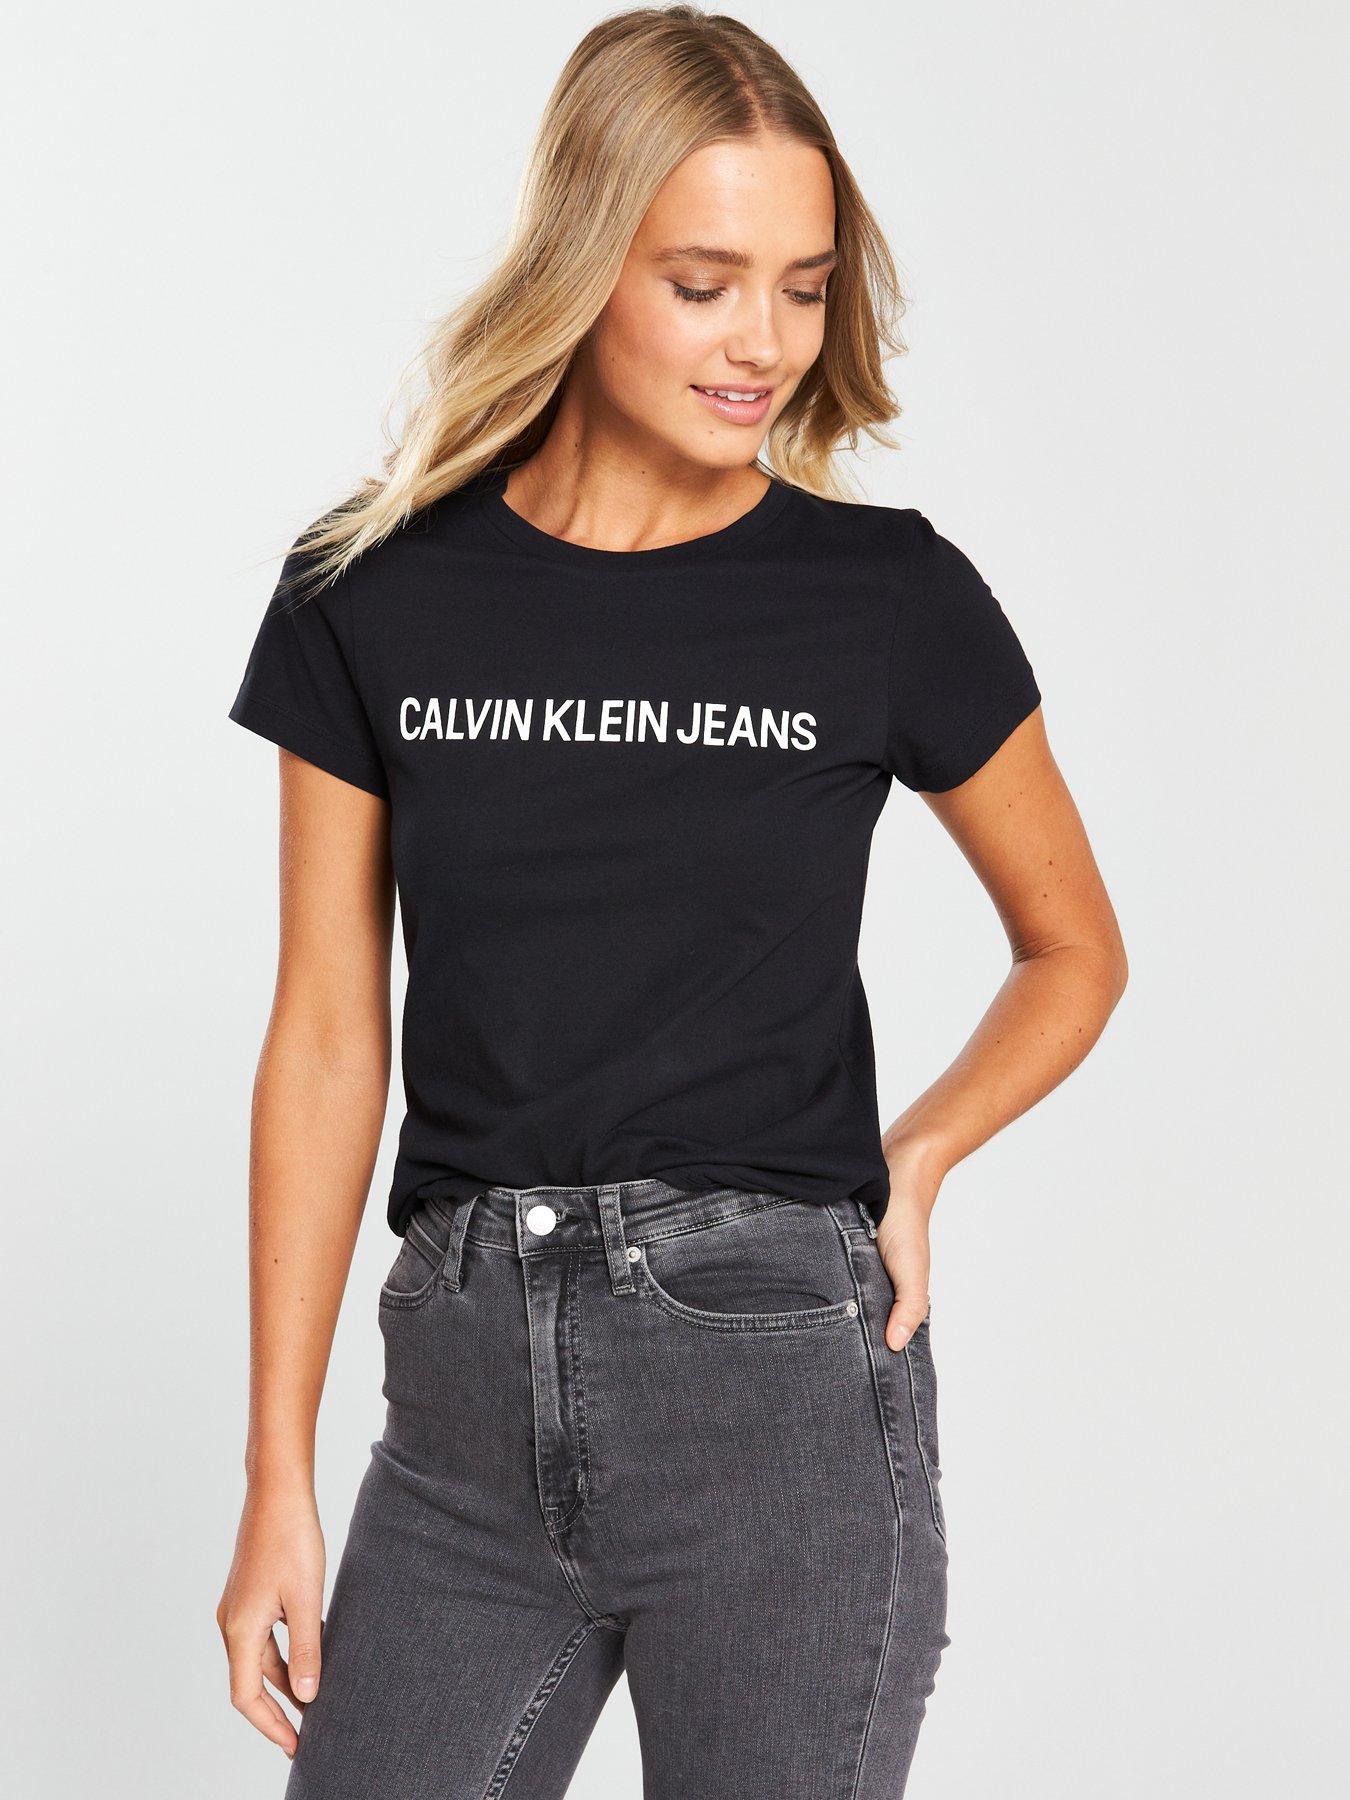 calvin klein jeans t shirt black